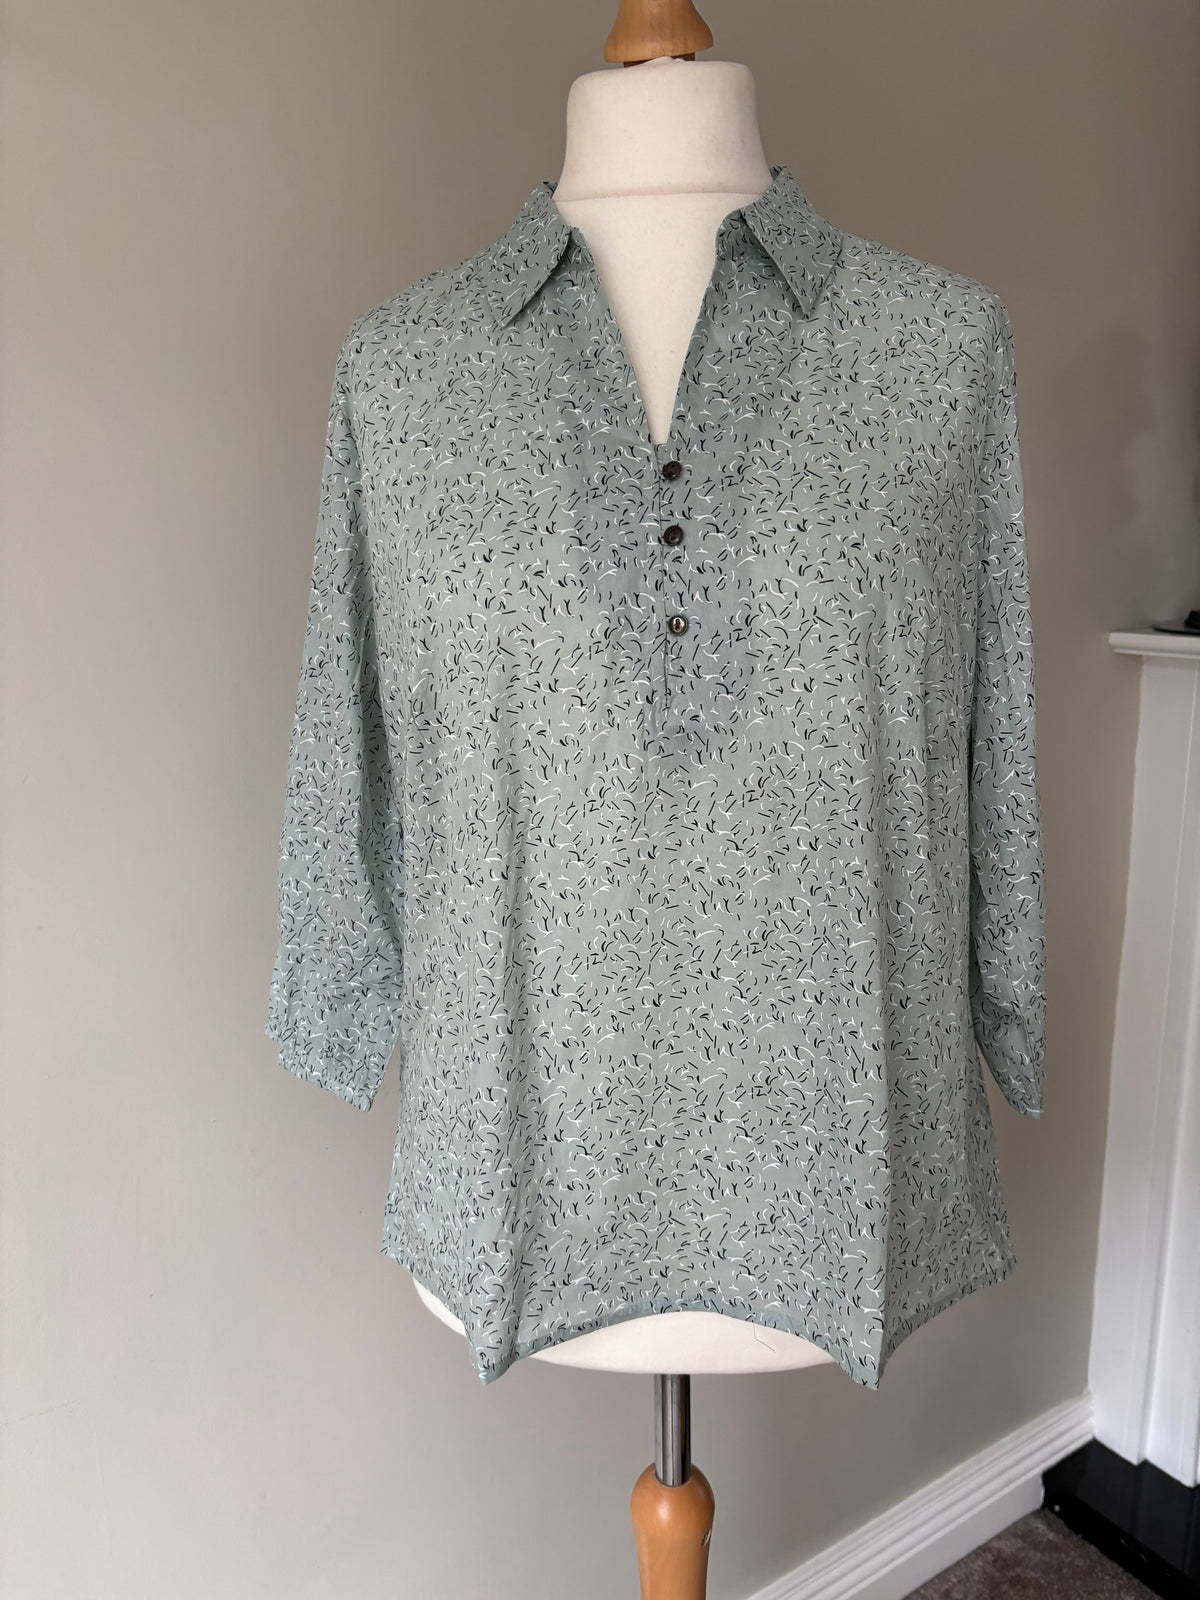 Mint green shirt by Freemans Size 18